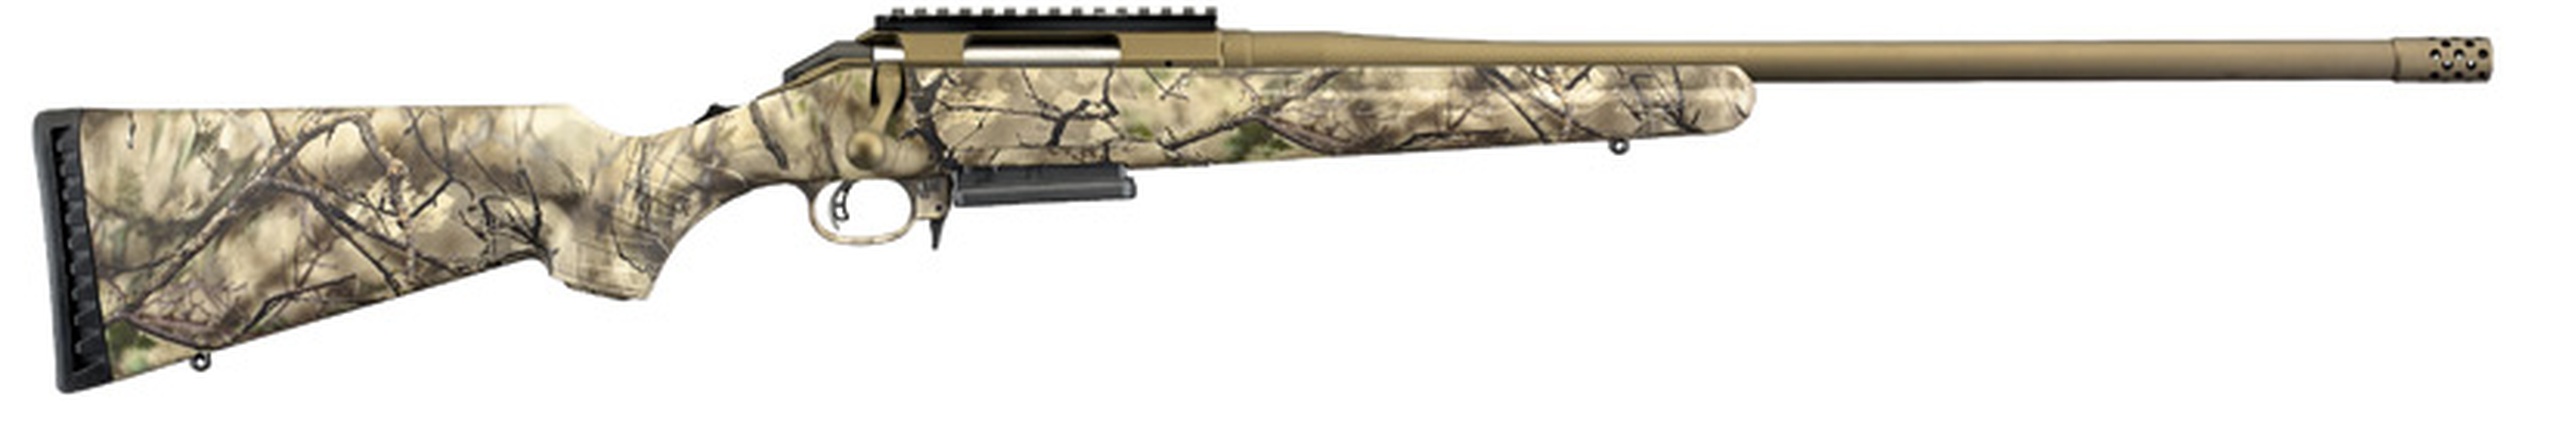 Don shot - Ruger American Rifle, 22", GO Wild Brush Cerakote, 6,5 Creedmoor